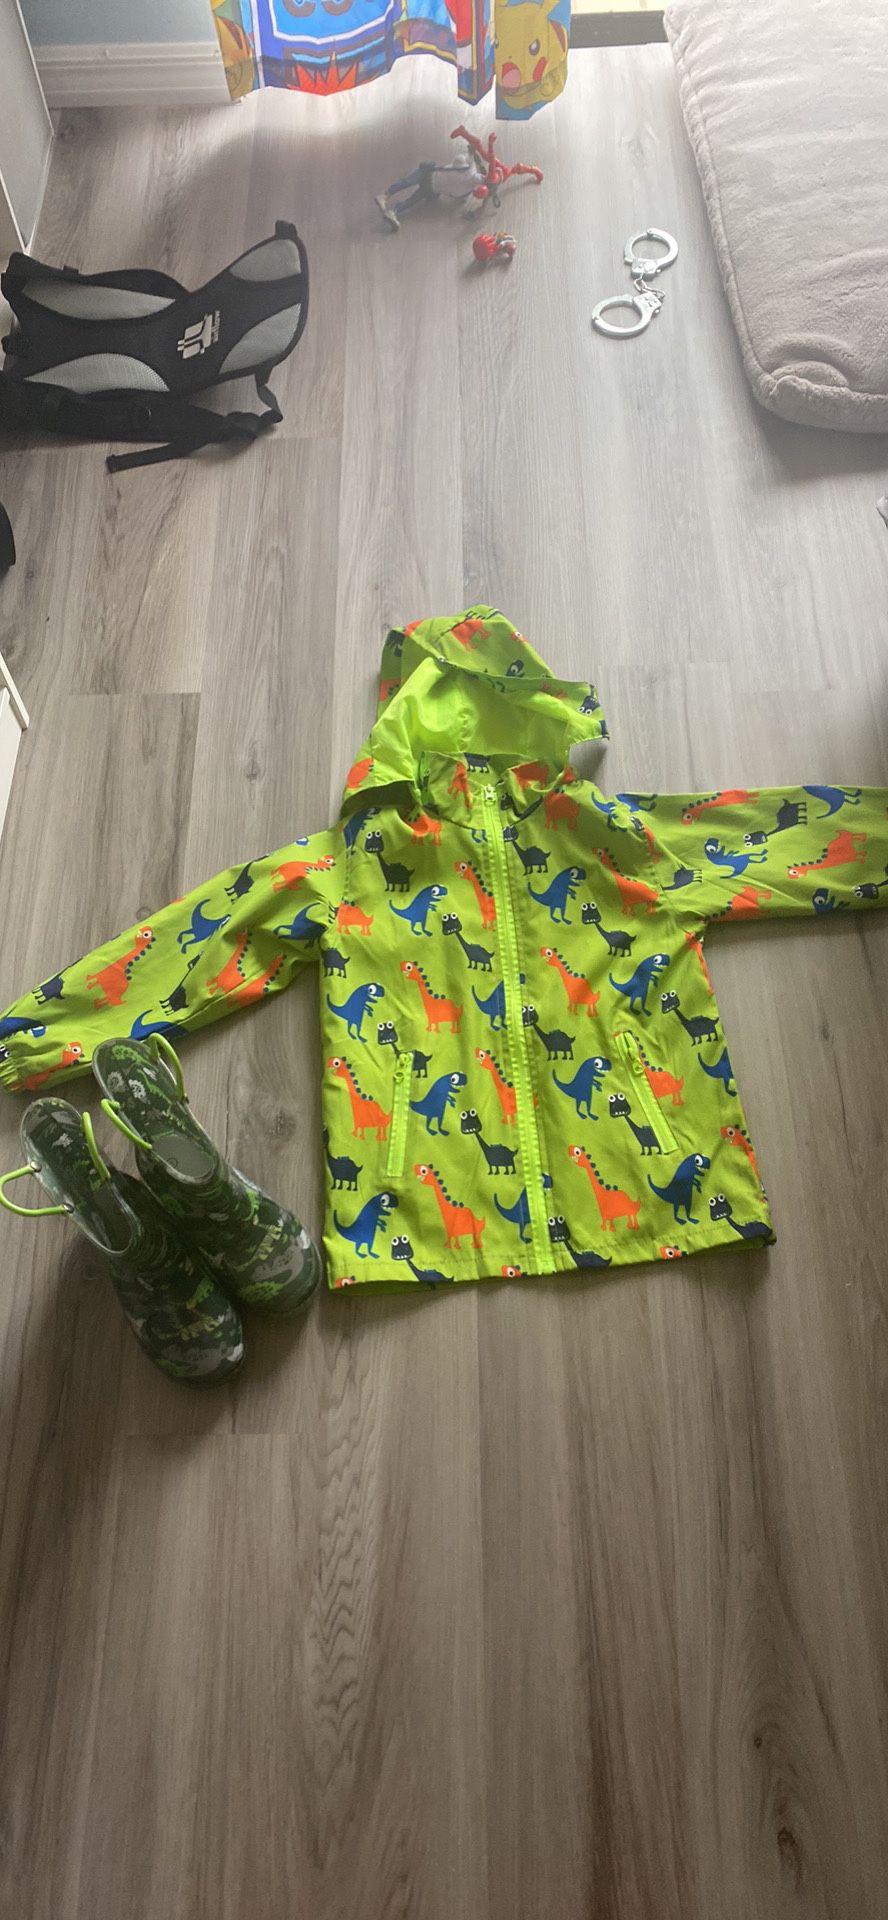 Dinosaur Rain Jacket Size 6/7 And Rain Boots Size 1